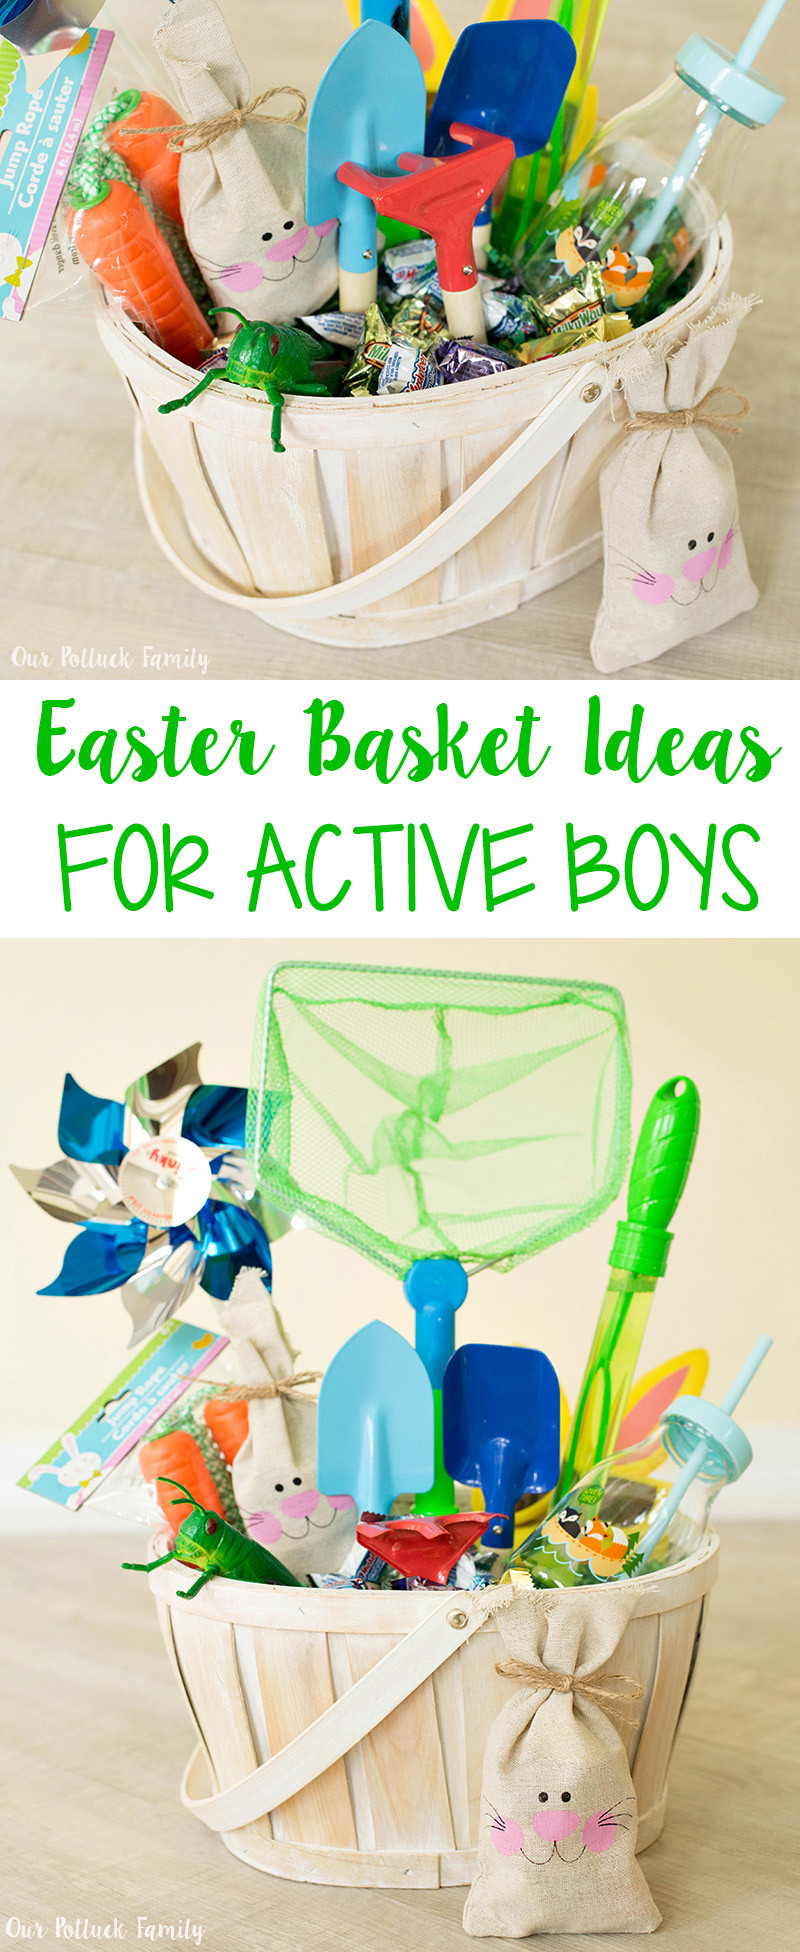 Boy Easter Basket Ideas
 Easter Basket for Active Boys Our Potluck Family